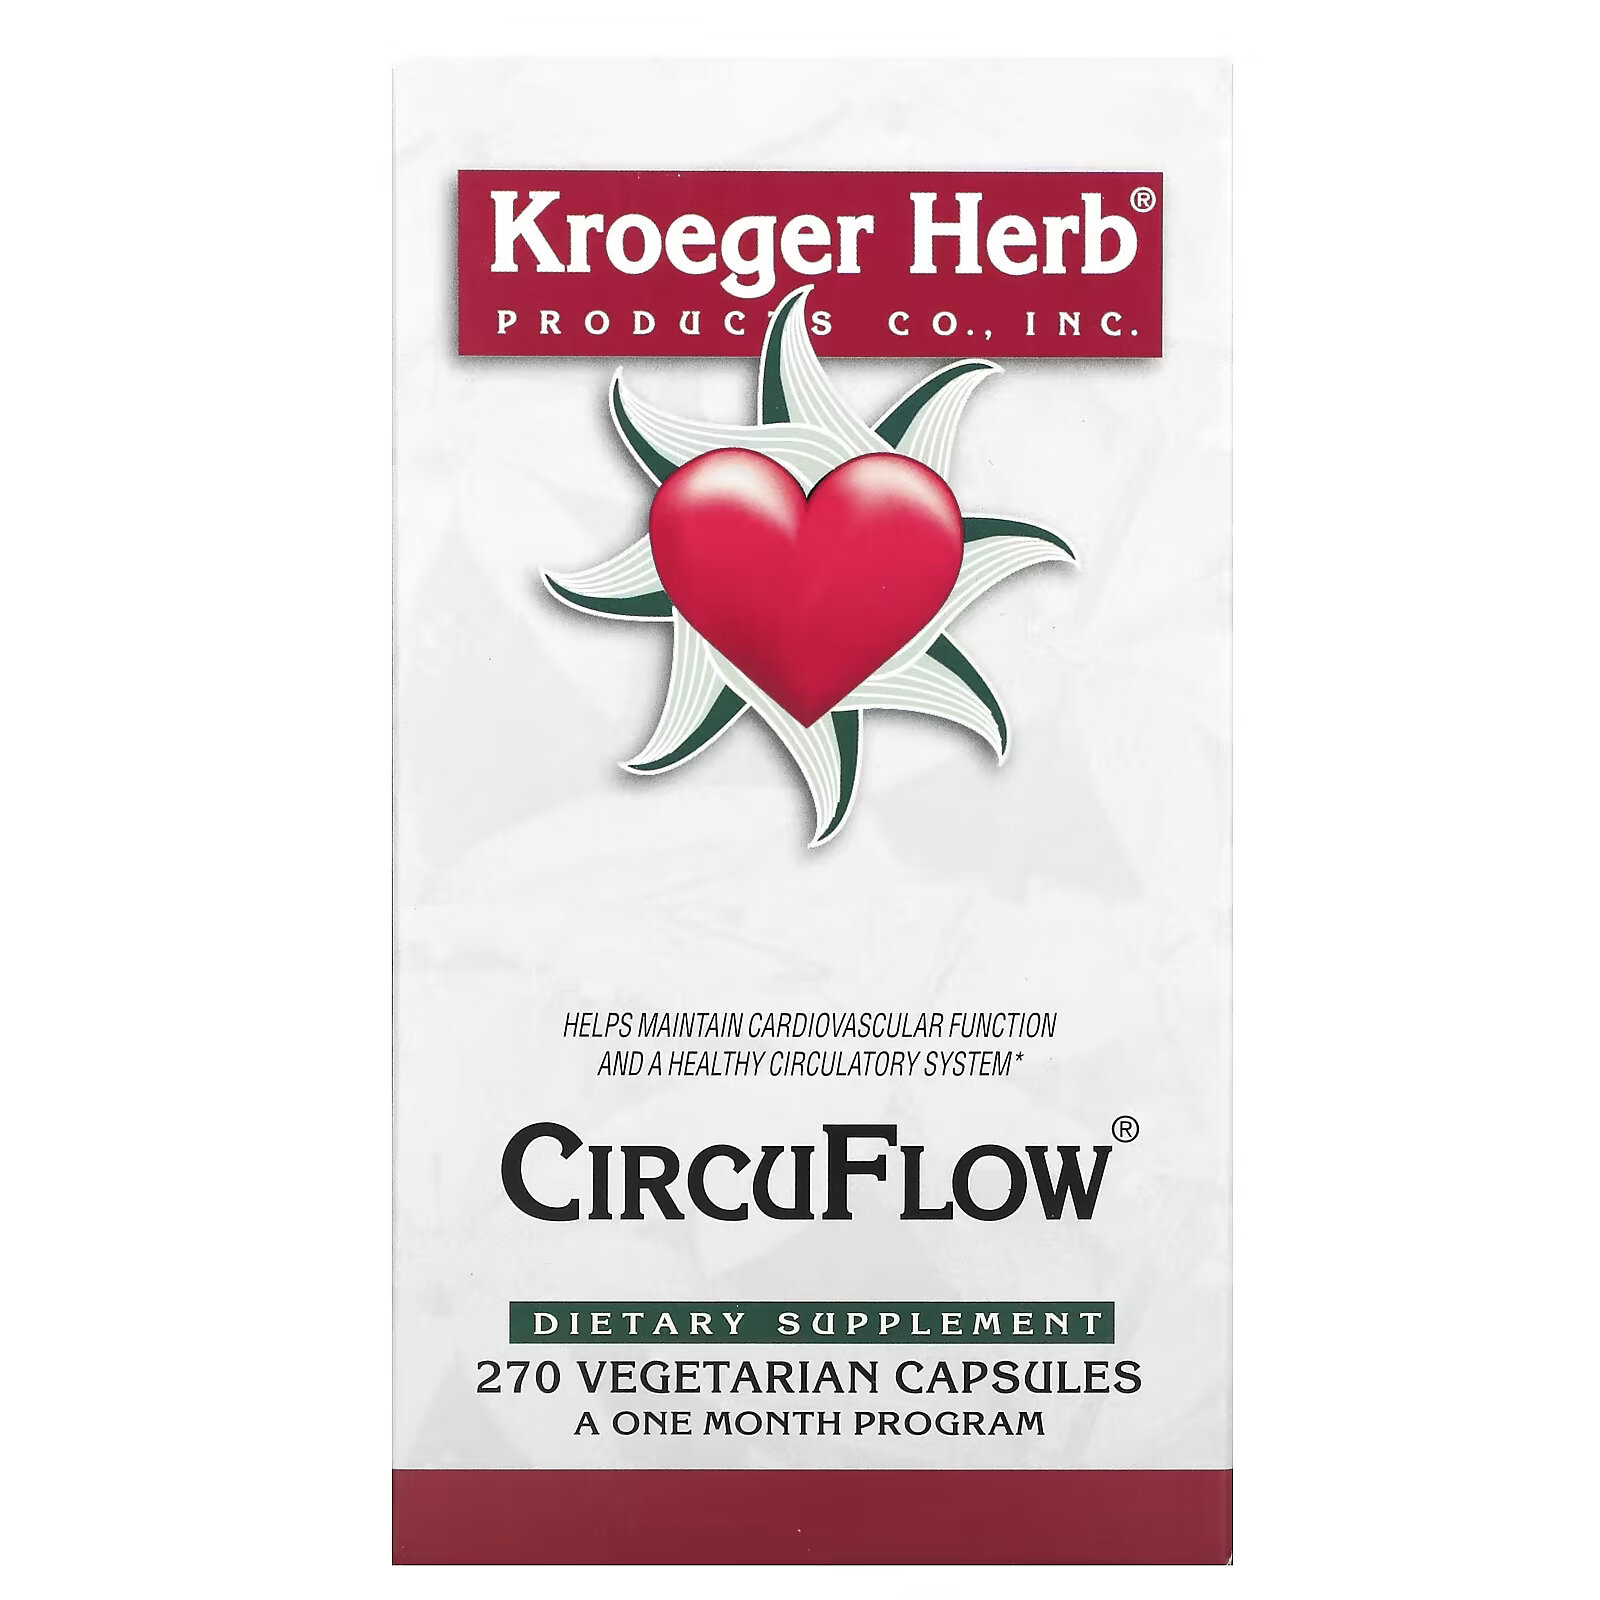 kroeger herb co черная редька и петрушка 100 вегетарианских капсул Kroeger Herb Co, CircuFlow, 270 вегетарианских капсул